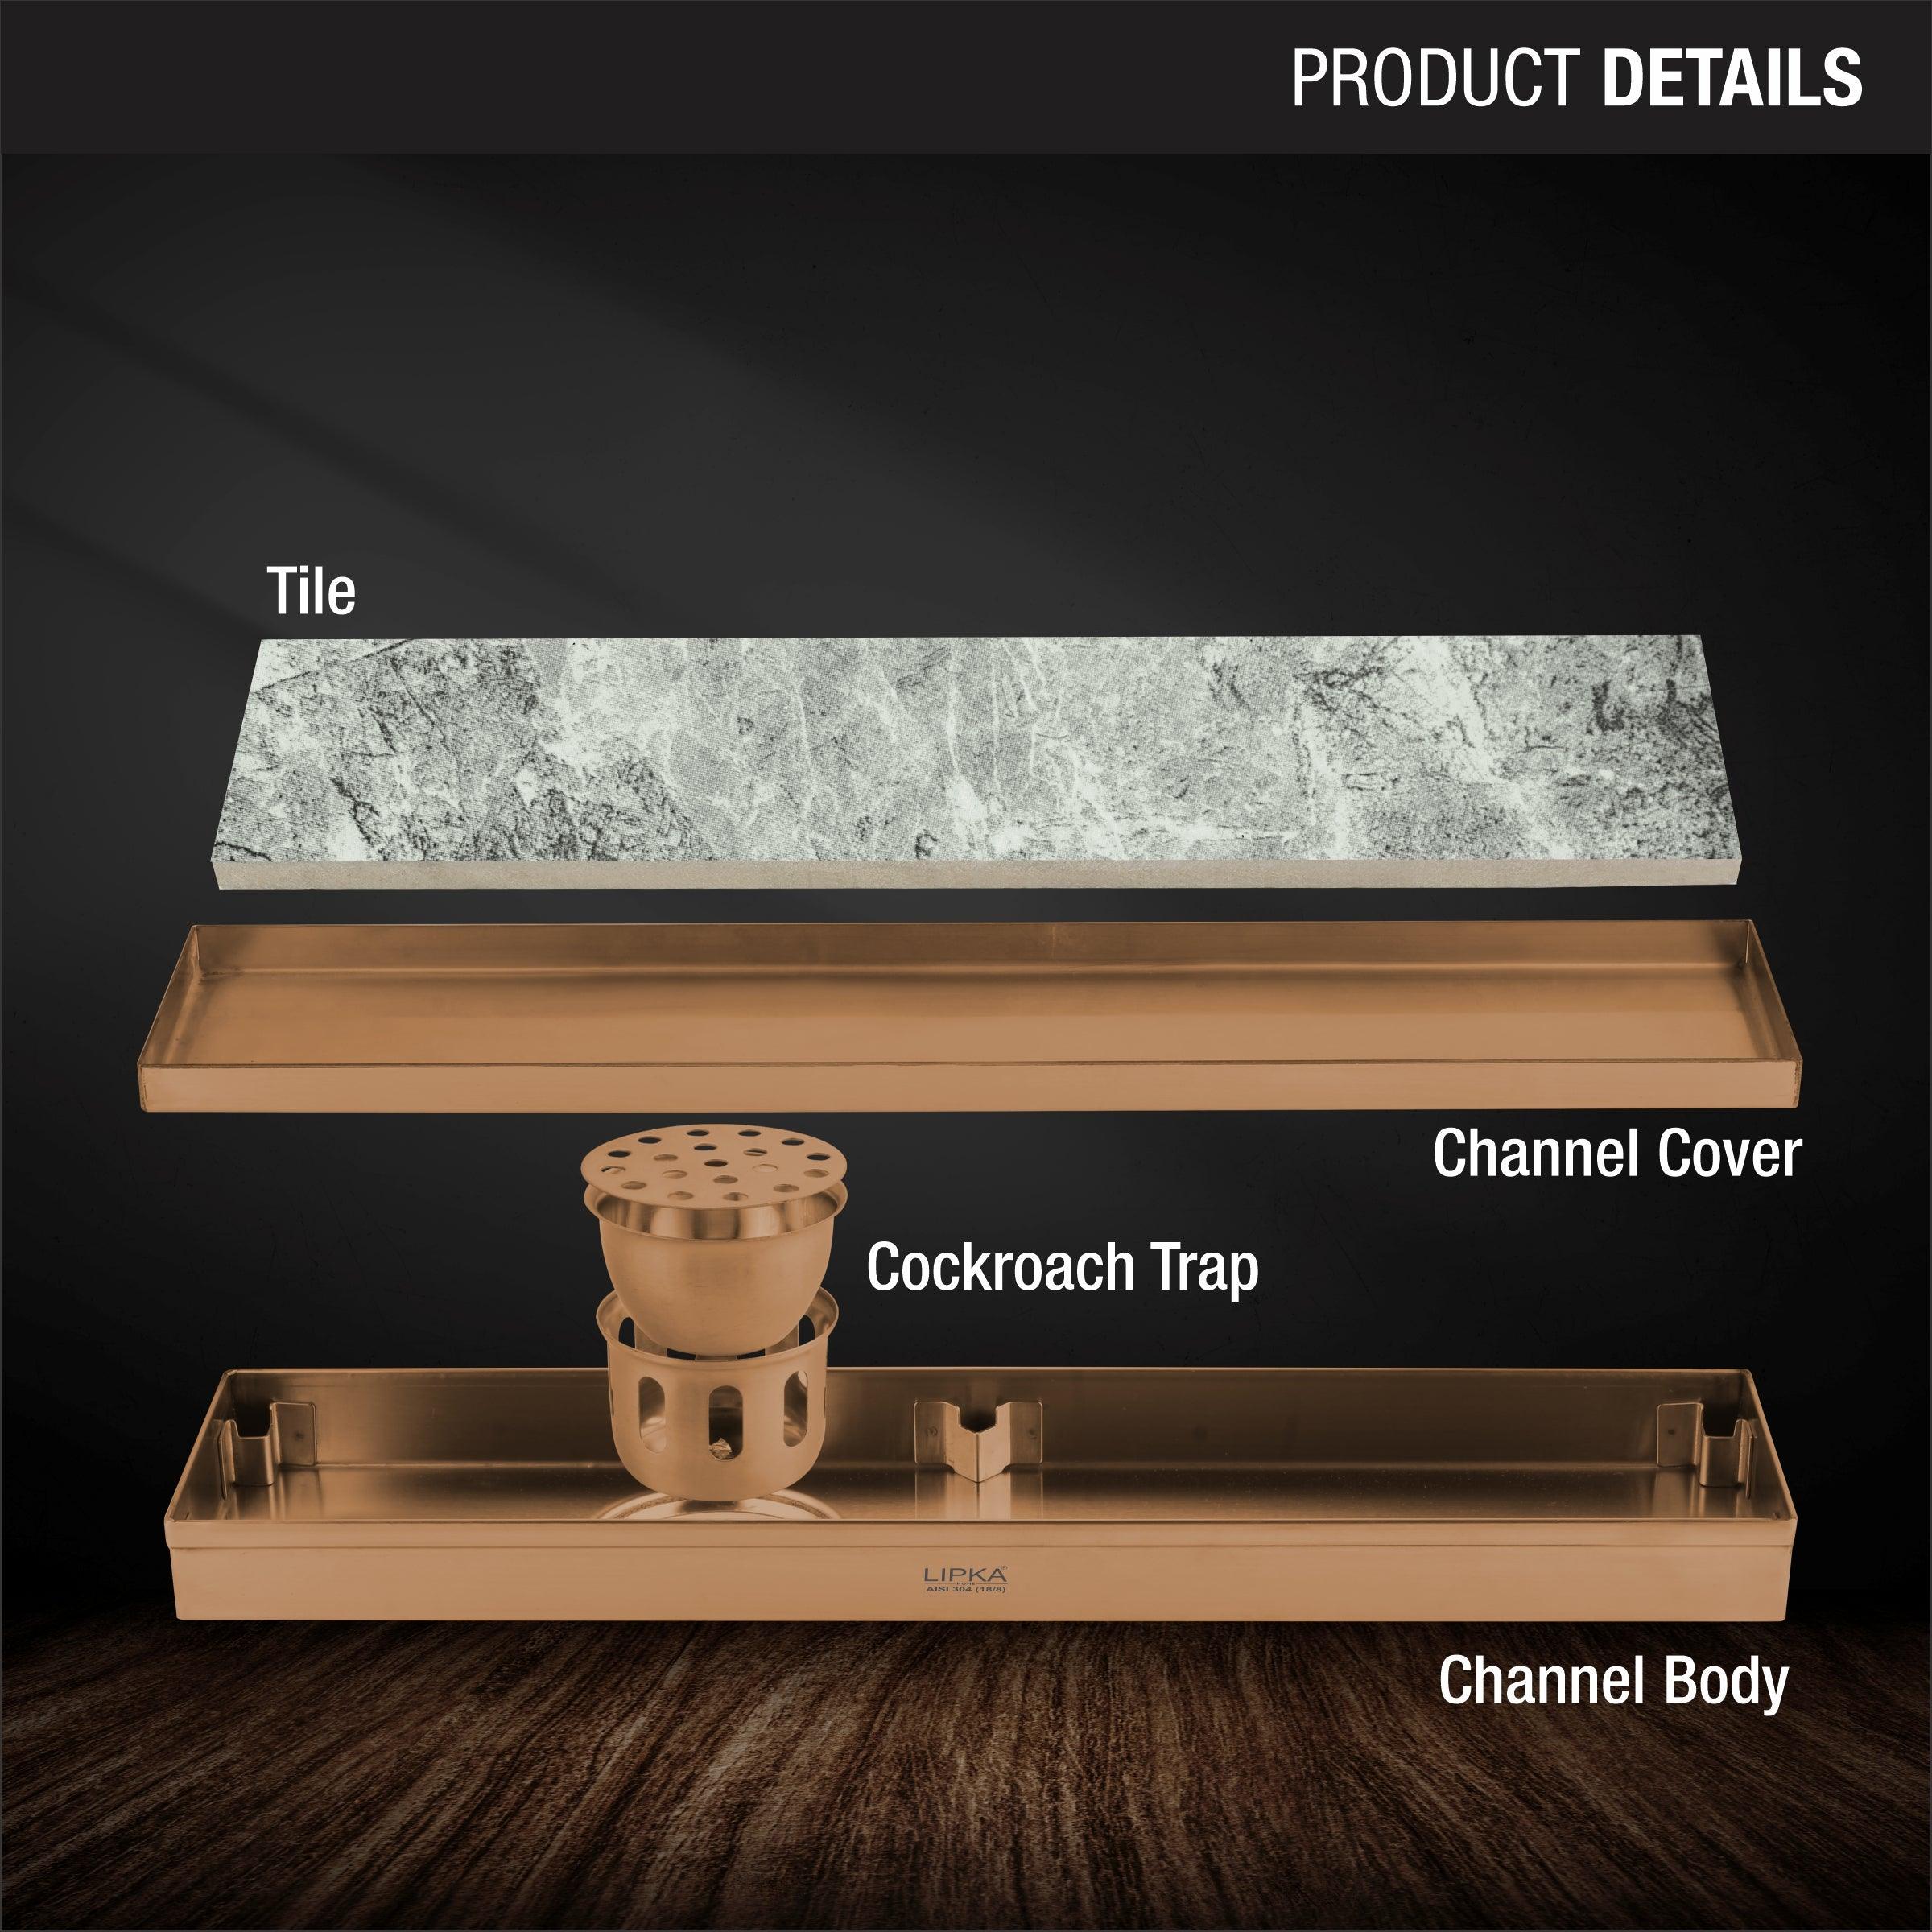 Tile Insert Shower Drain Channel - Antique Copper (40 x 5 Inches) product details